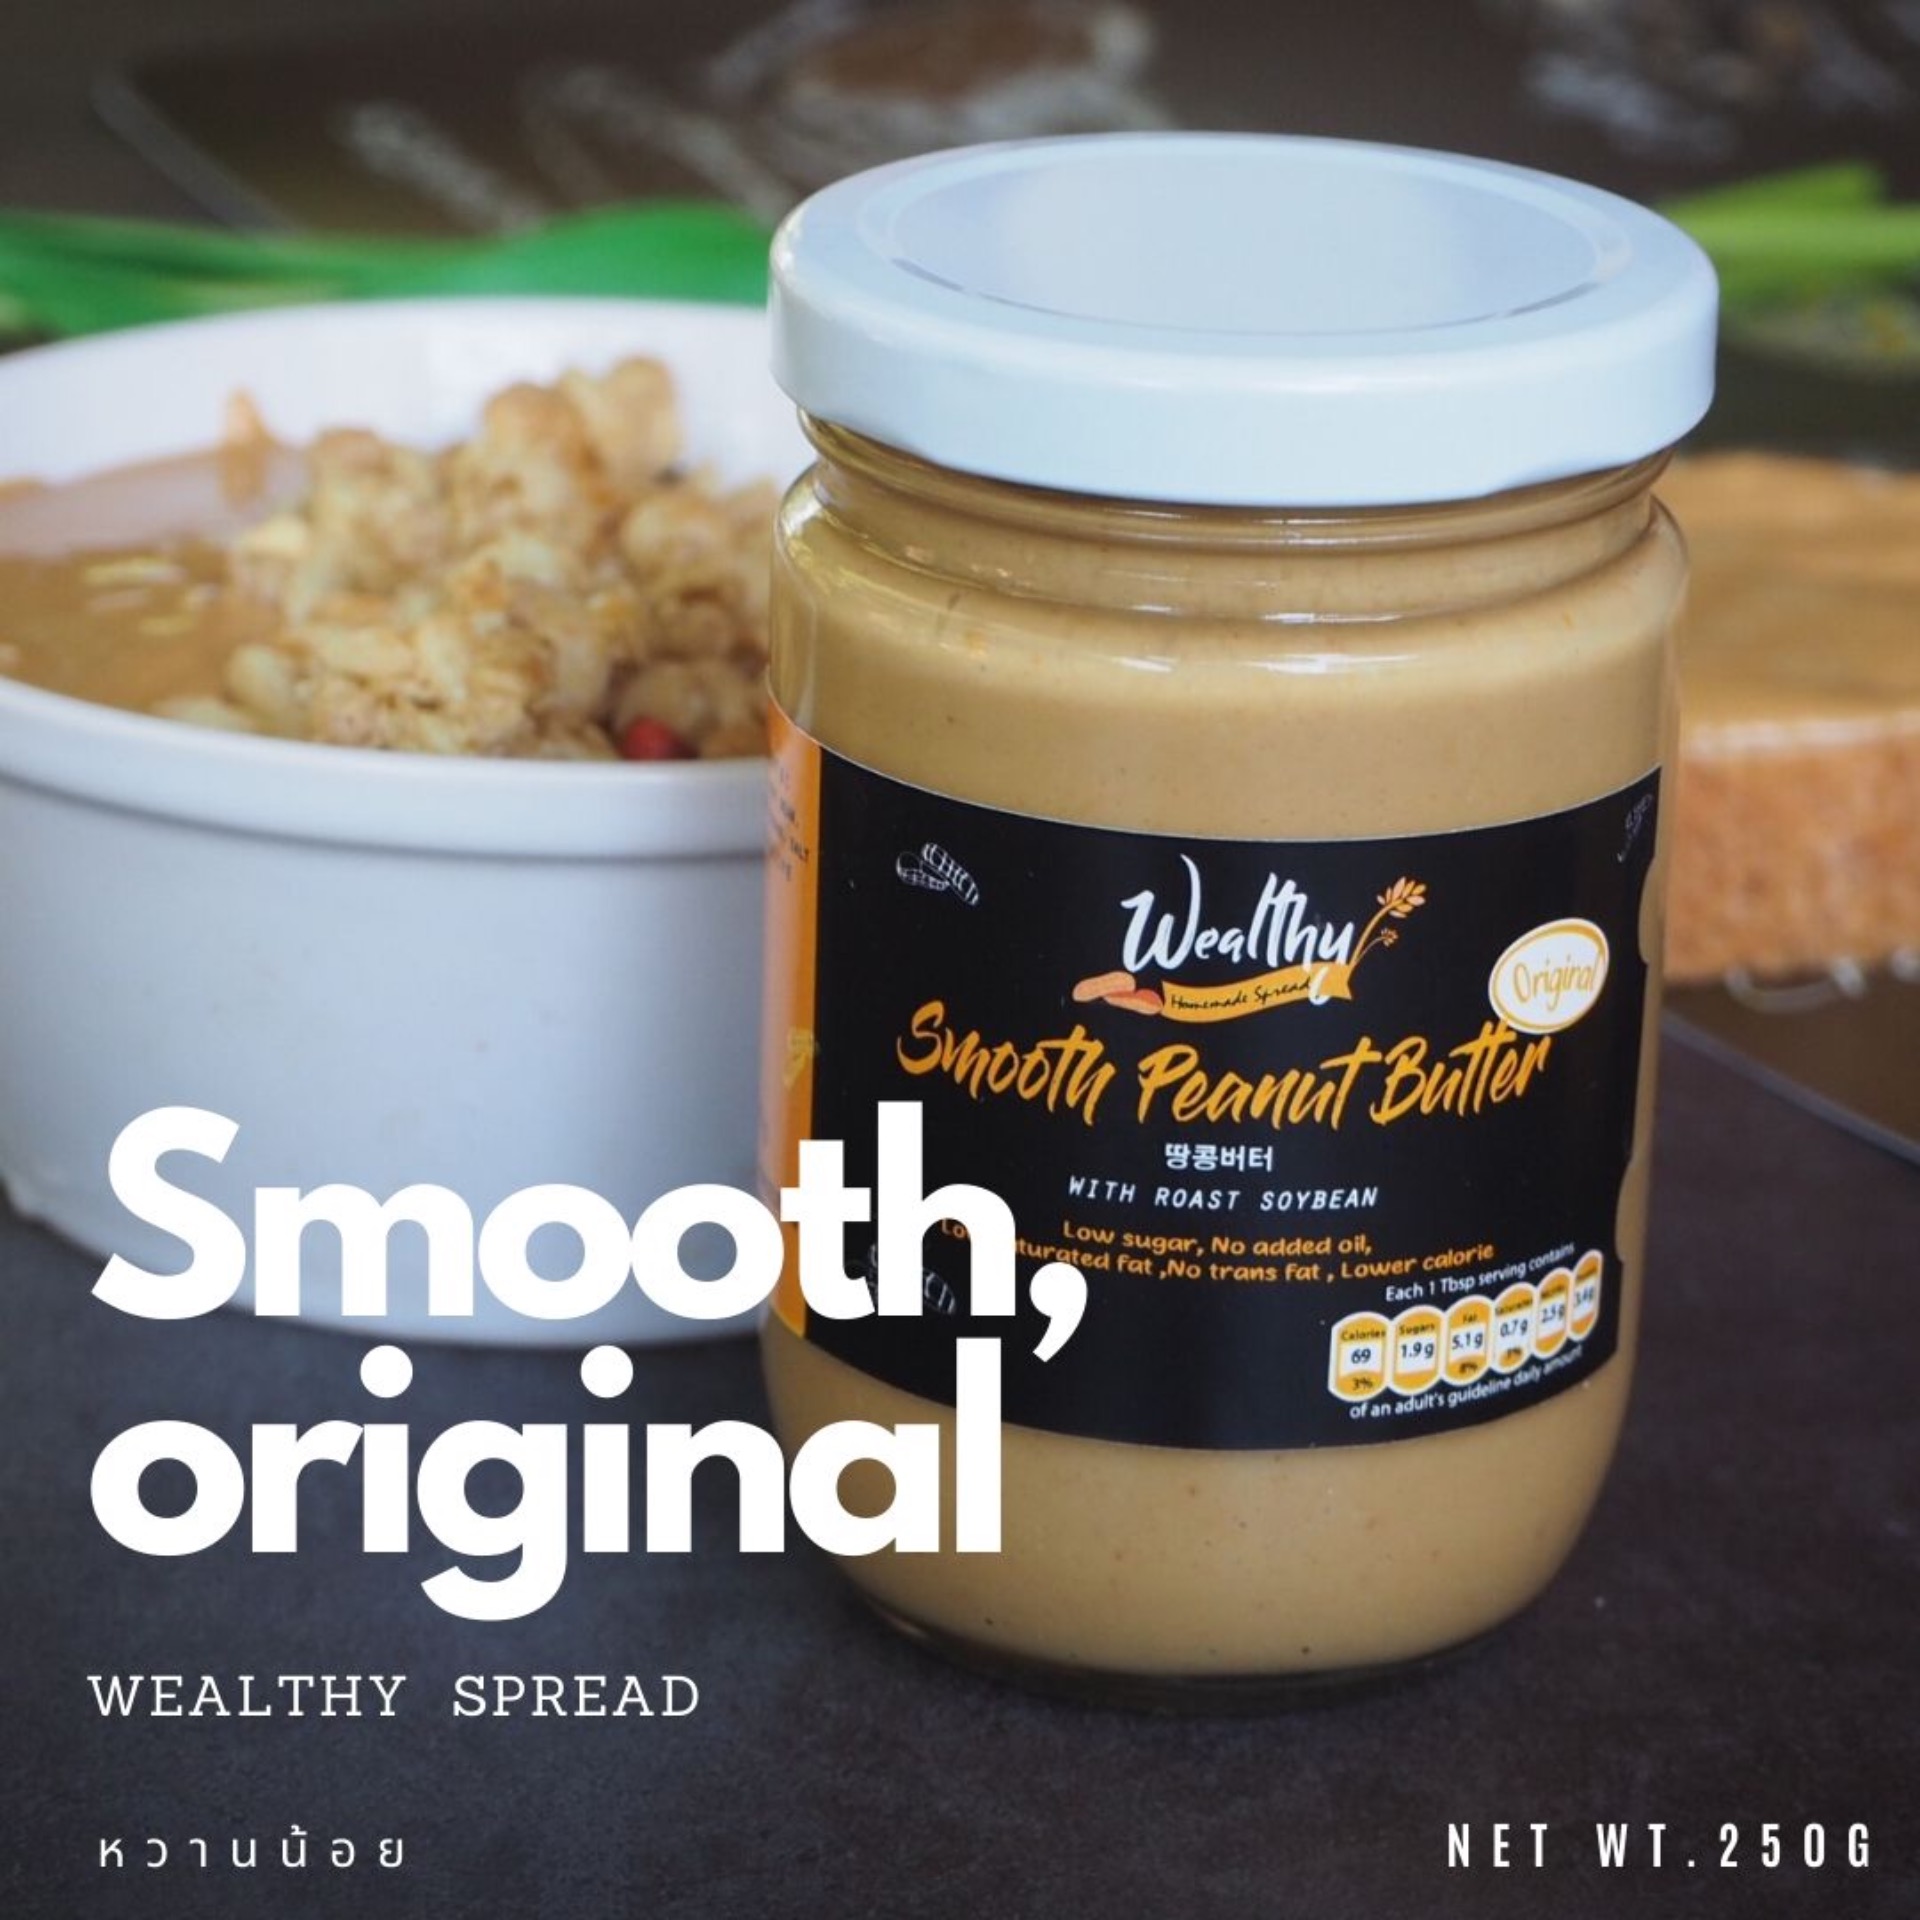 Wealthy เนยถั่วรสออริจินอล เนื้อเนียน หวานน้อย 250g Wealthy smooth original peanut butter low sugar